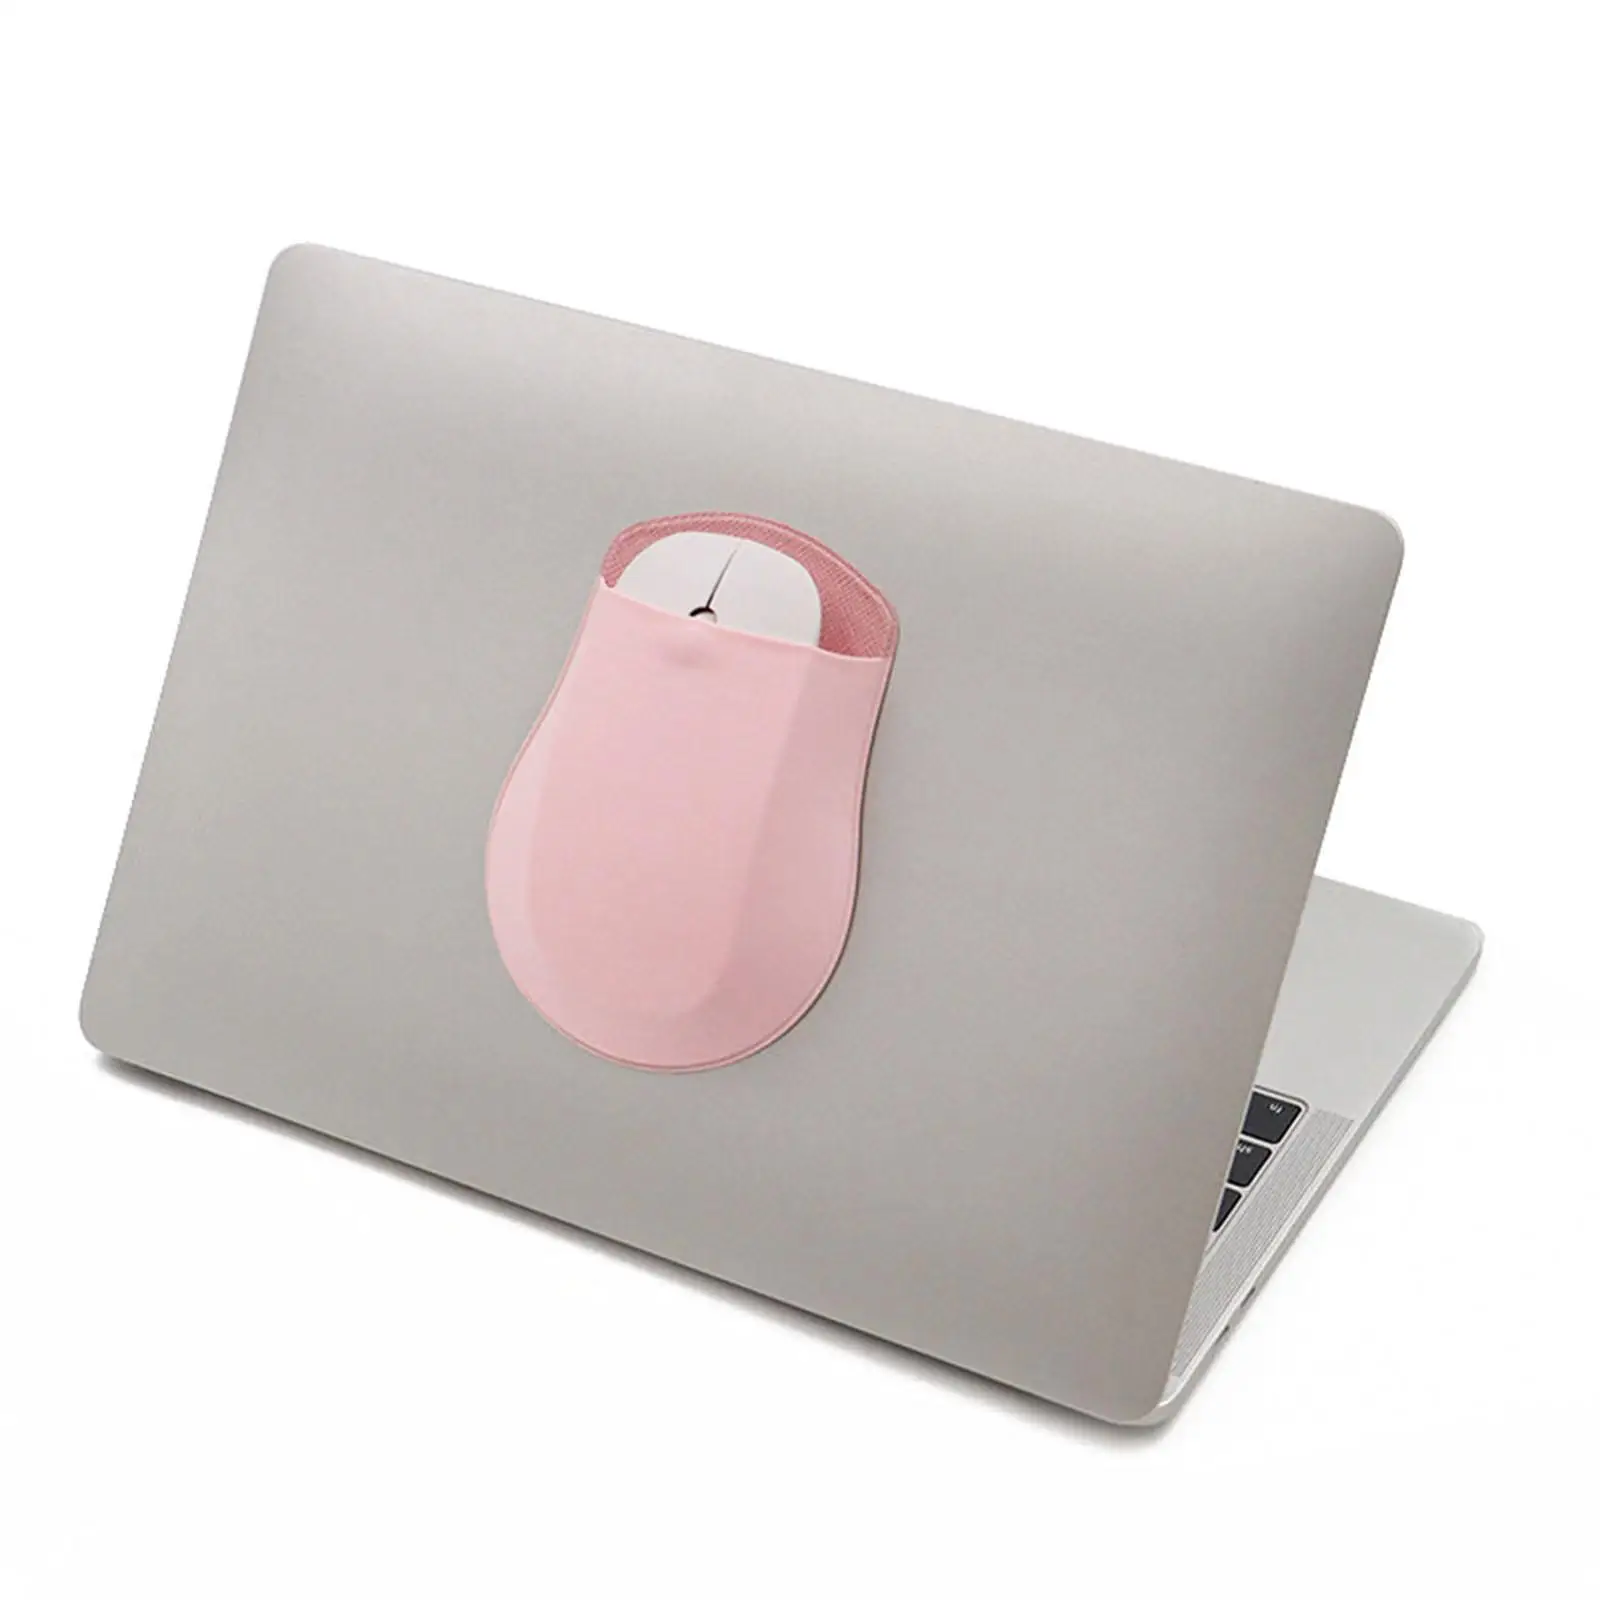 Laptop External Hard Drive Holder Storage Pocket for Pens Wireless Mouse